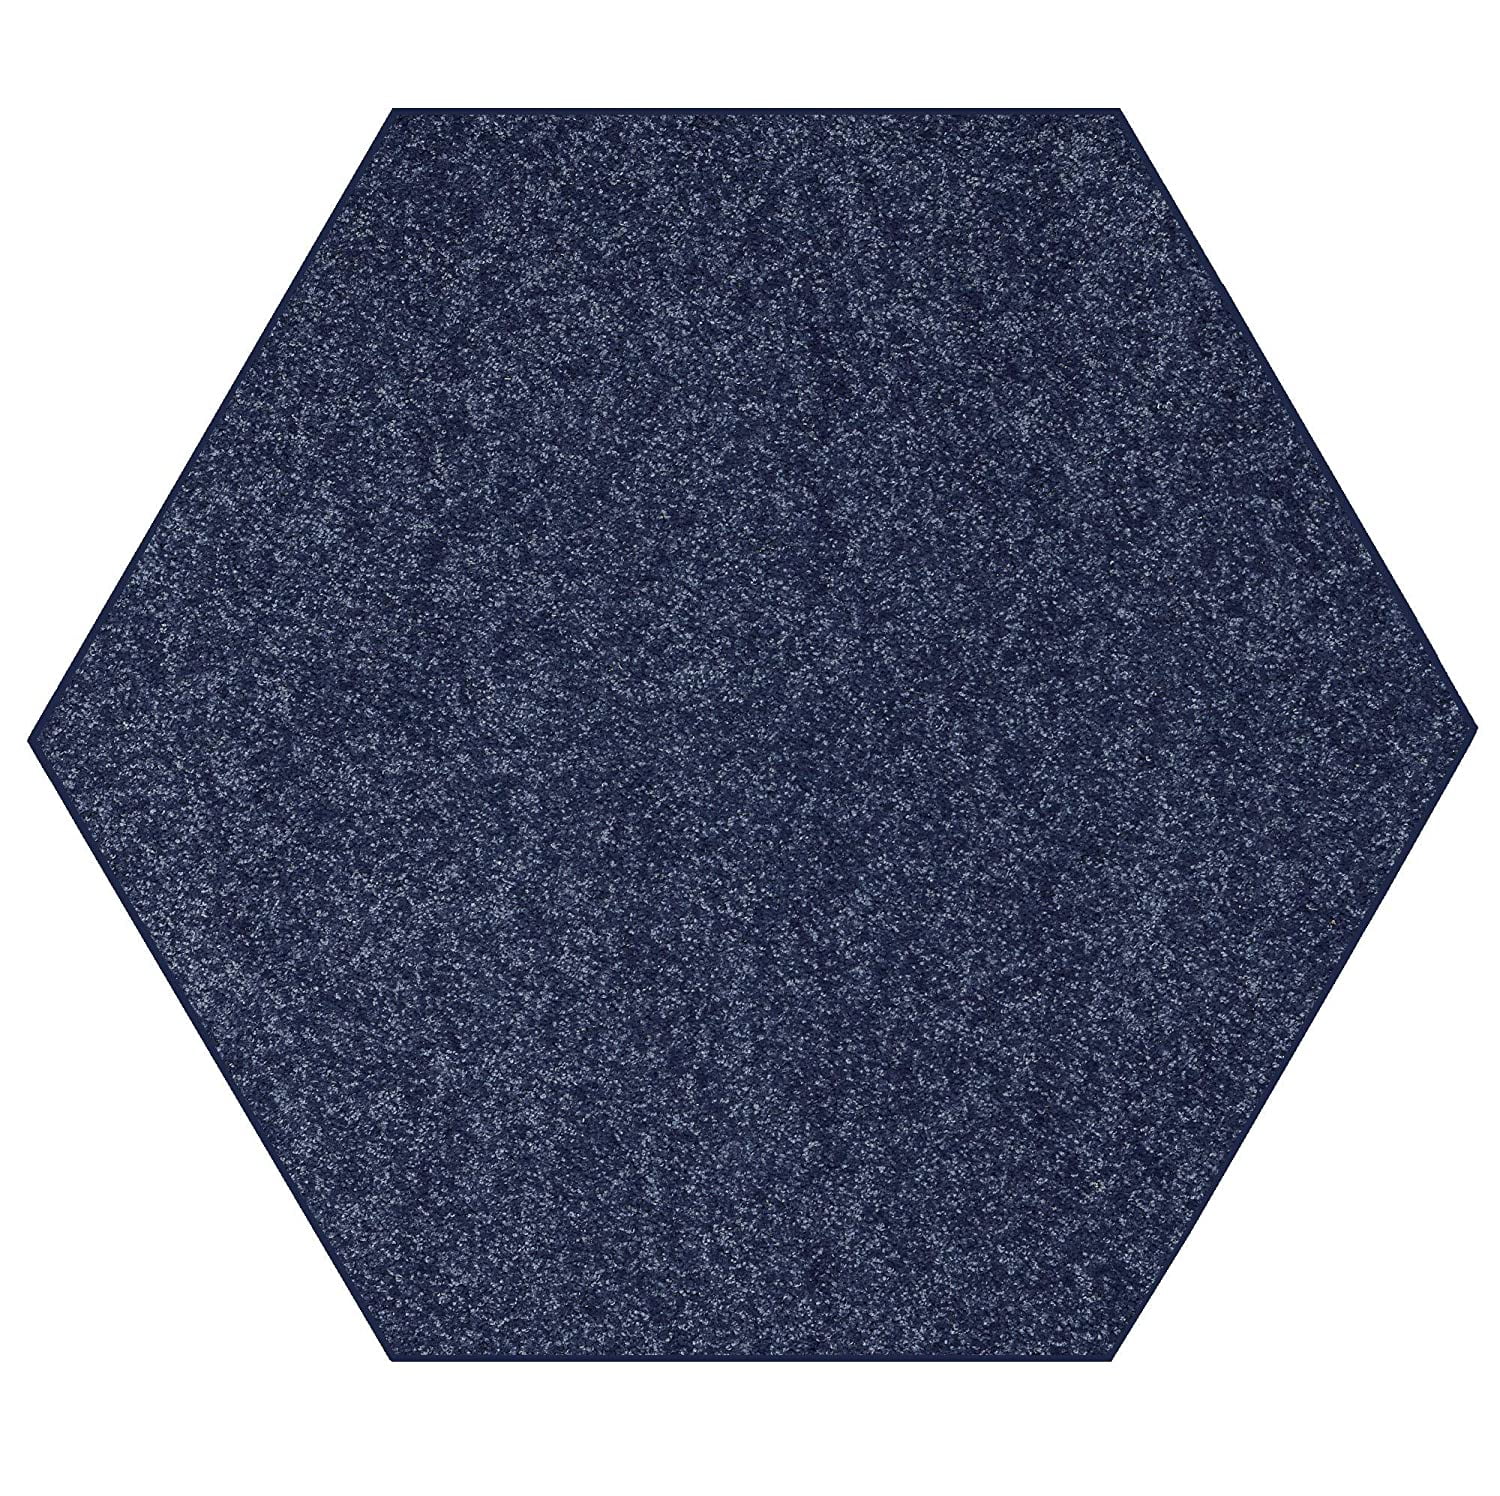 Hexagonal Lampshade Denim Blue Textured 100% Linen Fabric Choice of Colours